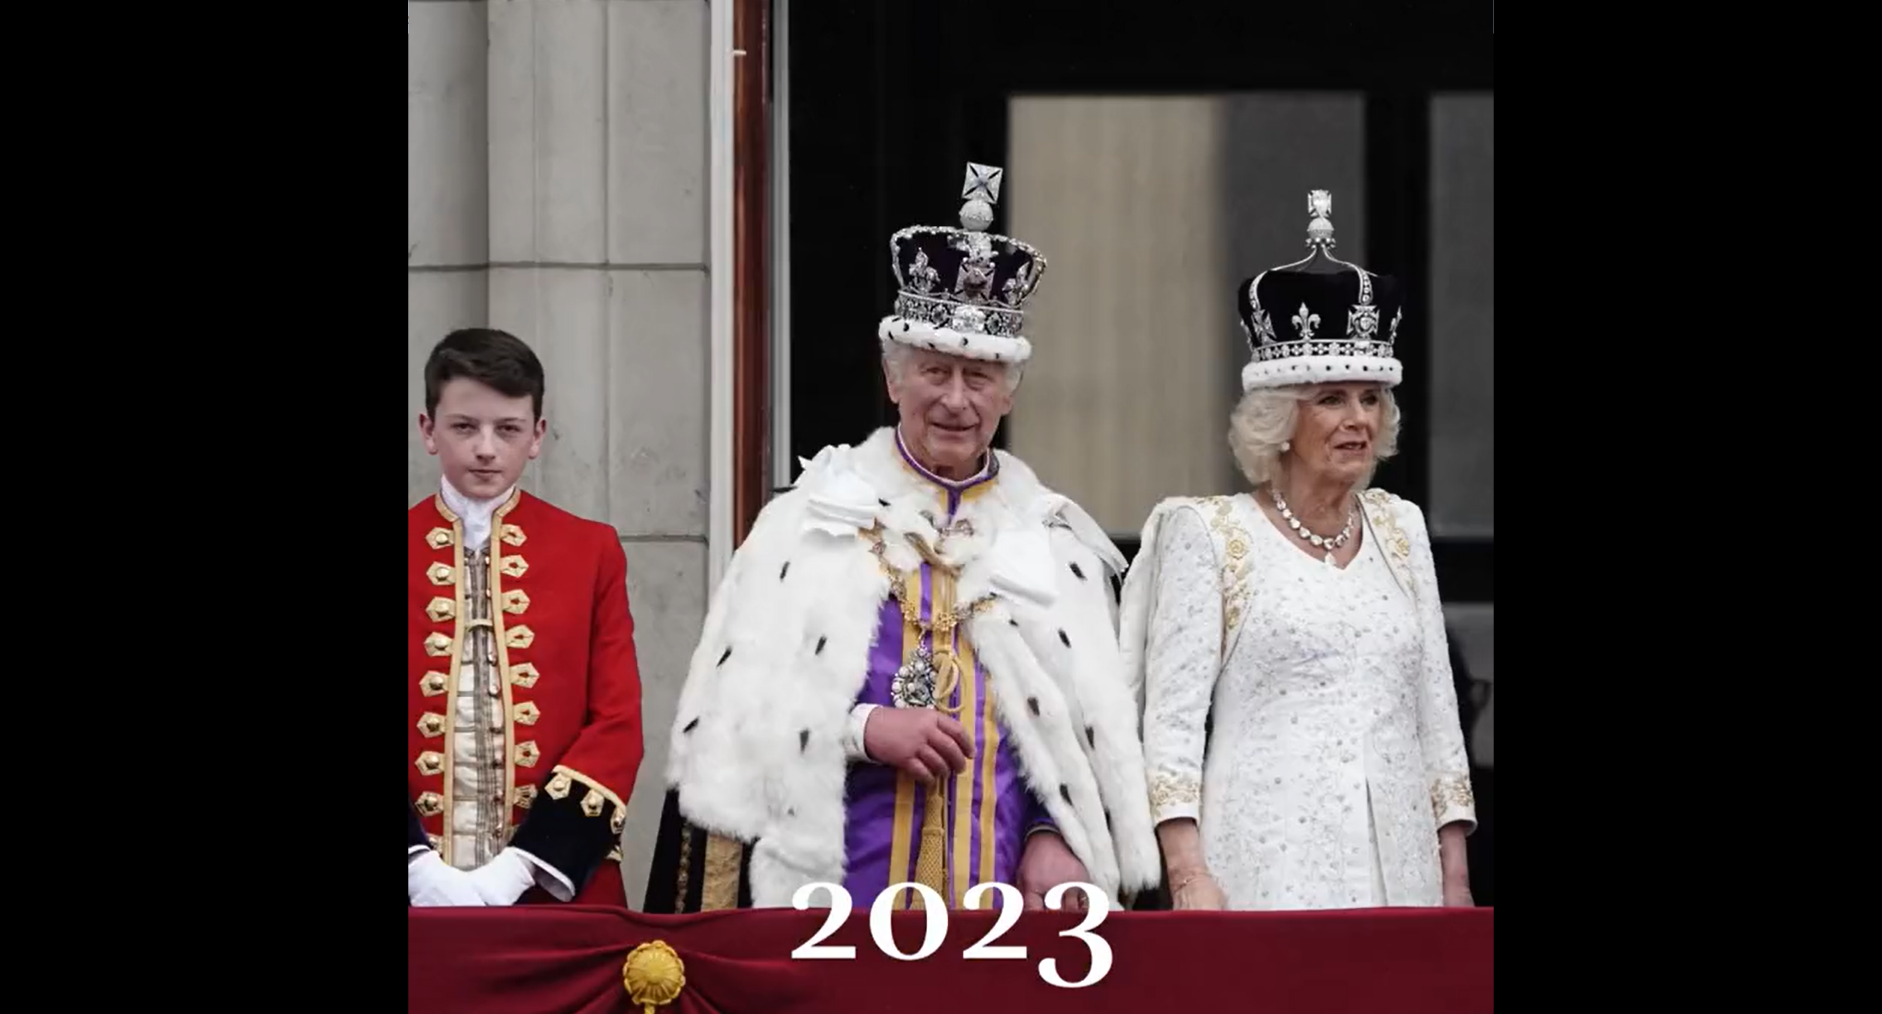 The King’s coronation 2023